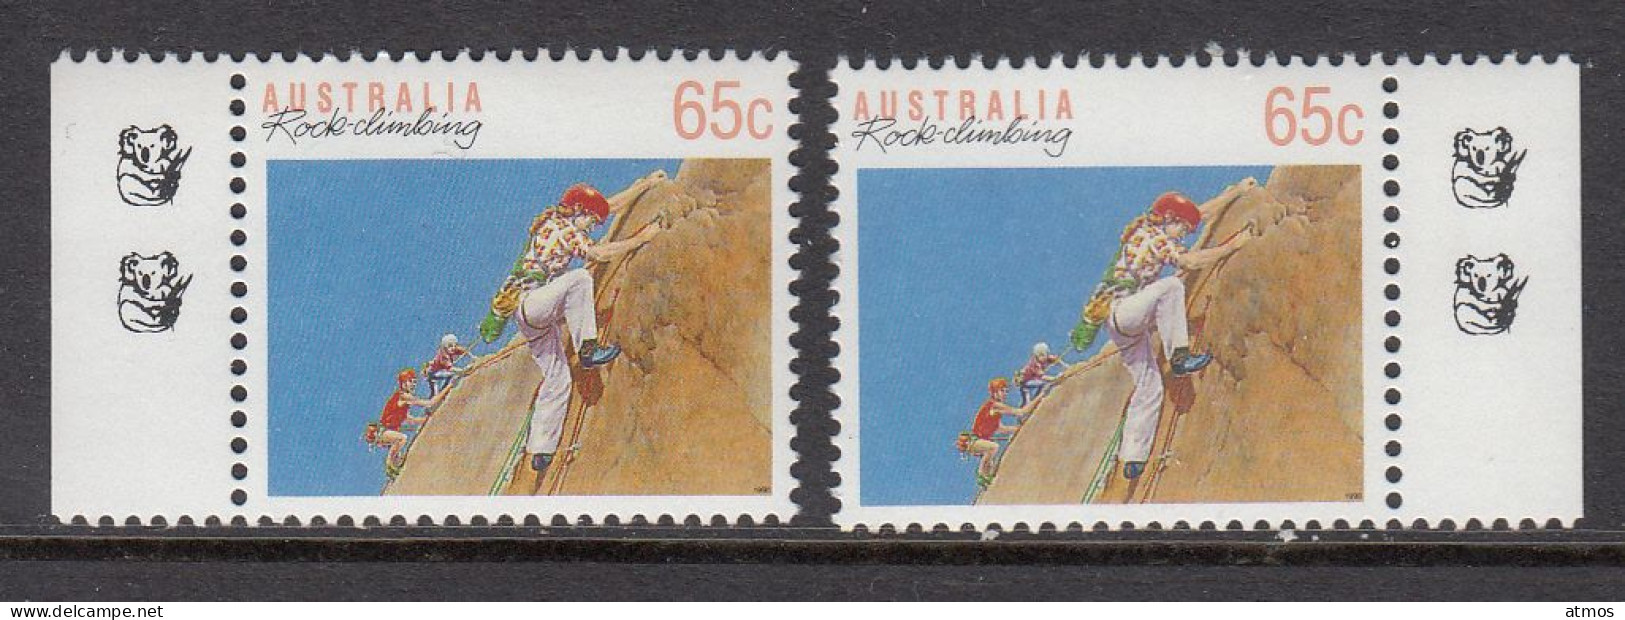 Australia MNH Michel Nr 1185 From 1990 Reprint 2 Koala - Neufs